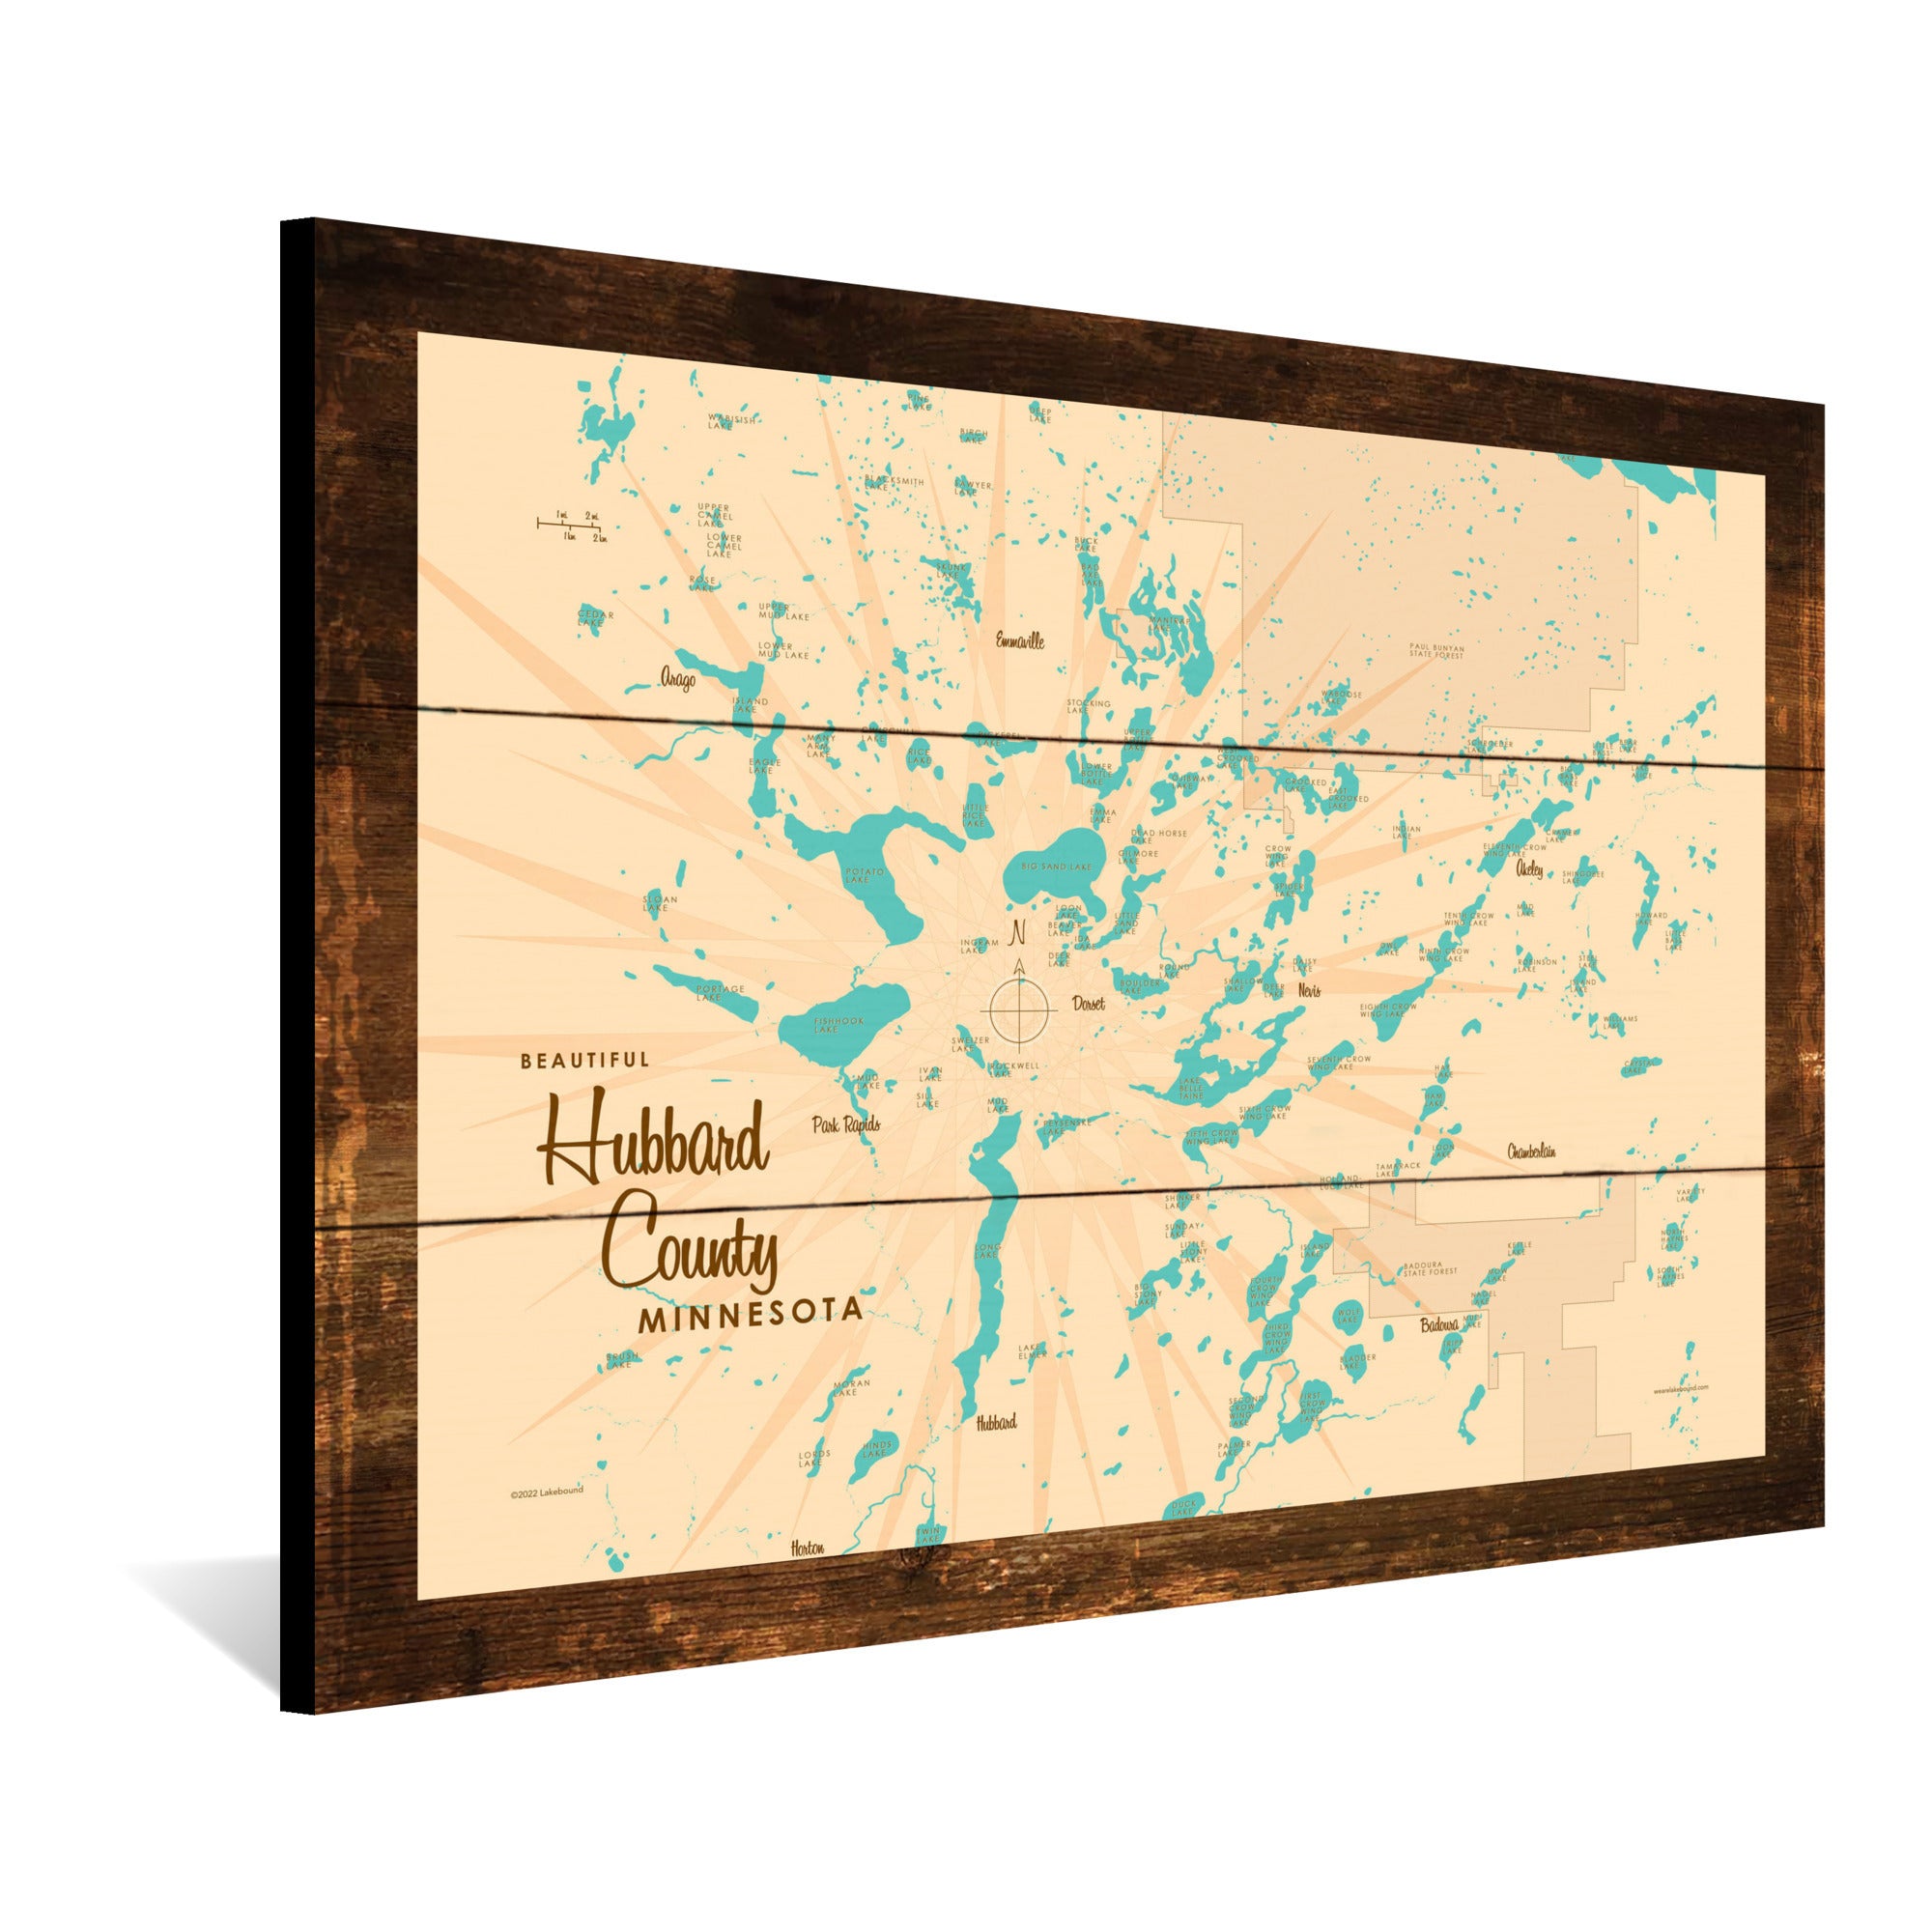 Hubbard County Minnesota, Rustic Wood Sign Map Art